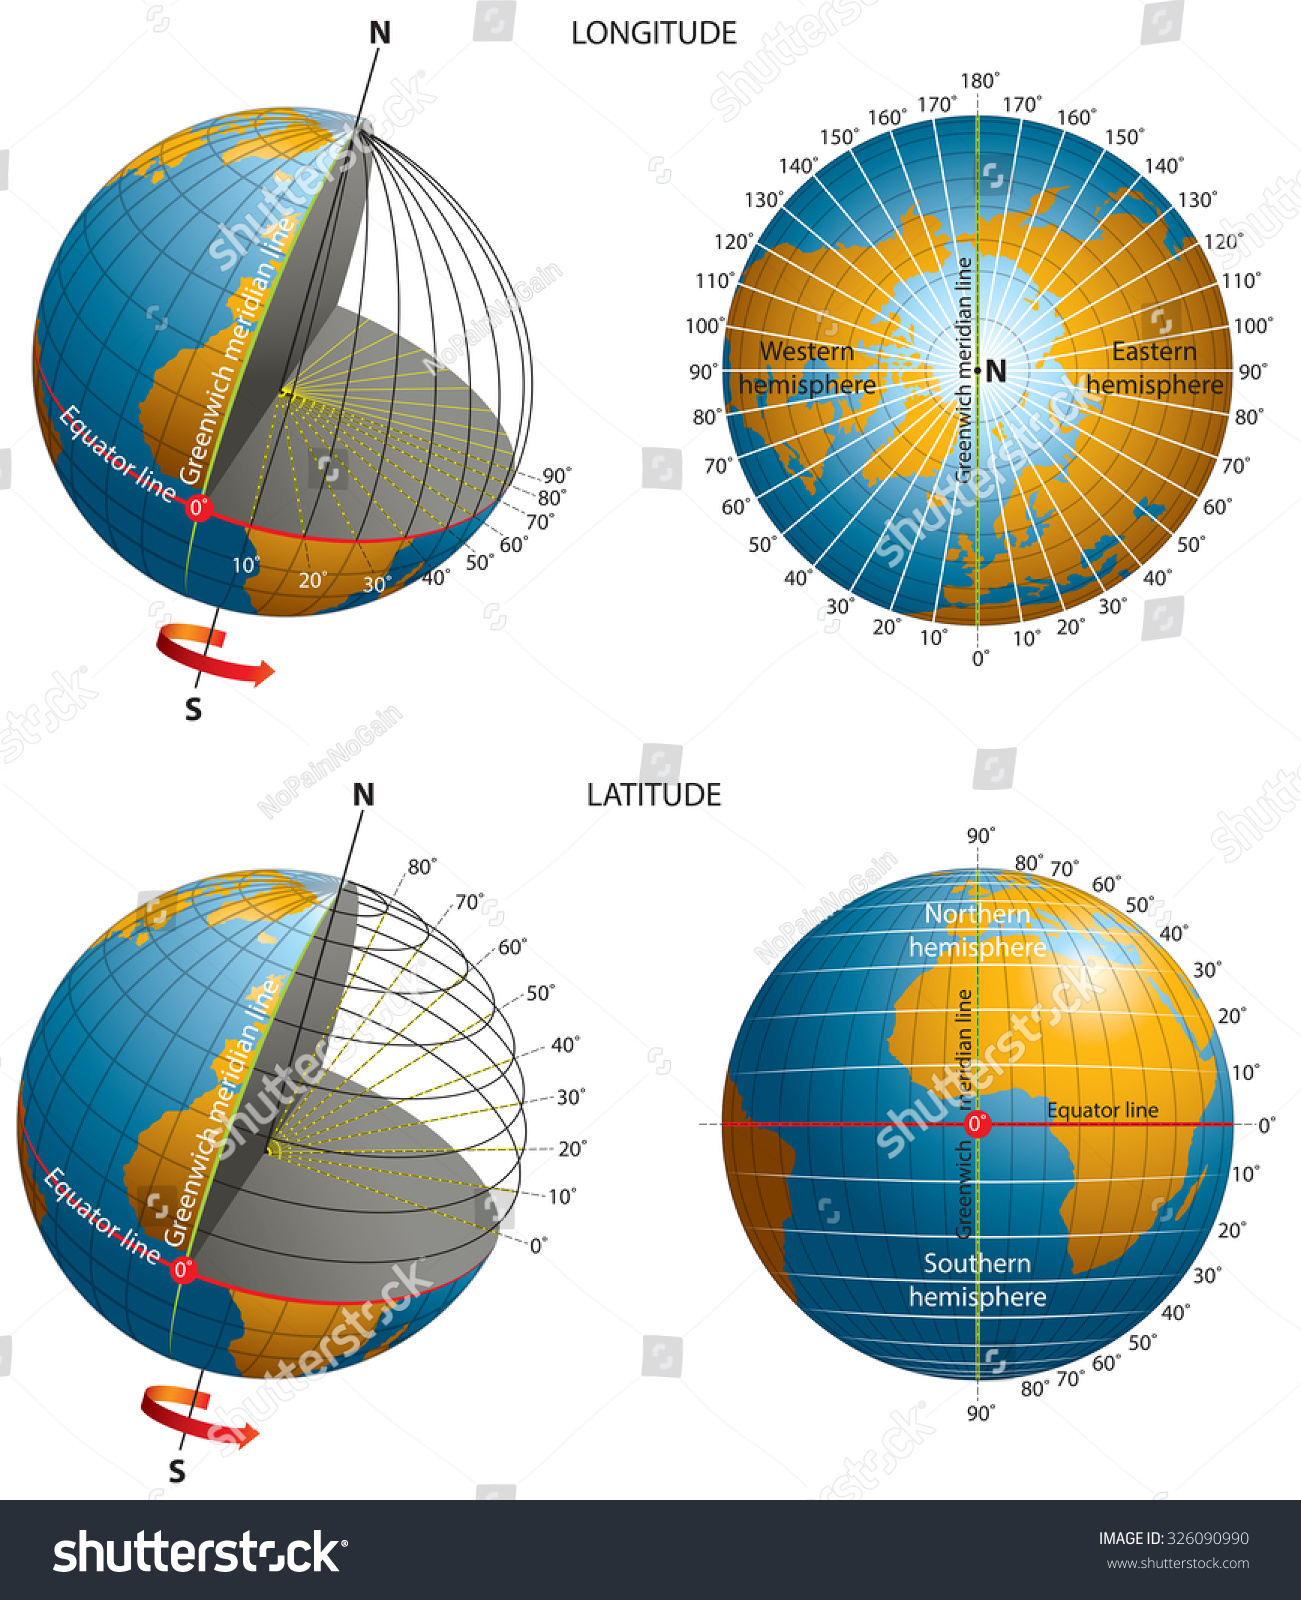 longitude and latitude coordinates